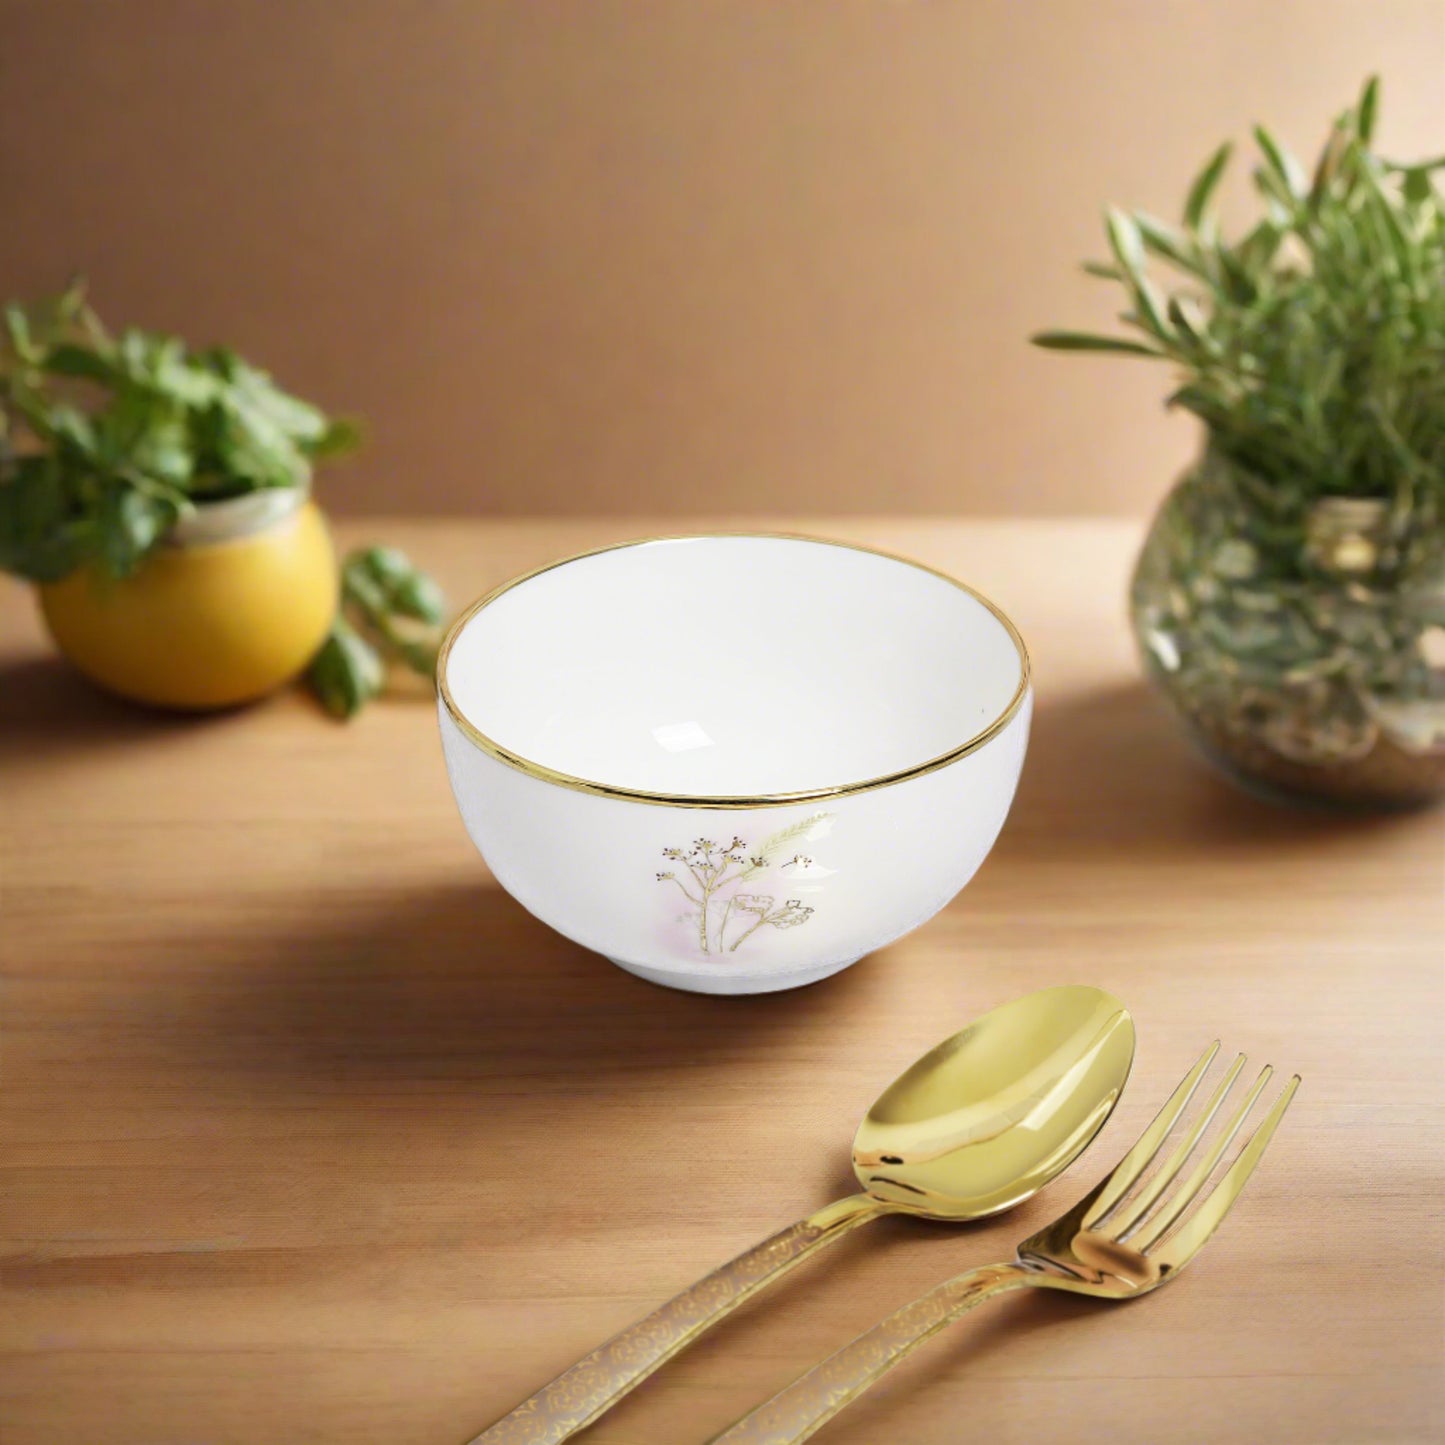 Versatile ceramic bowl - ideal for soups, salads, or snacks